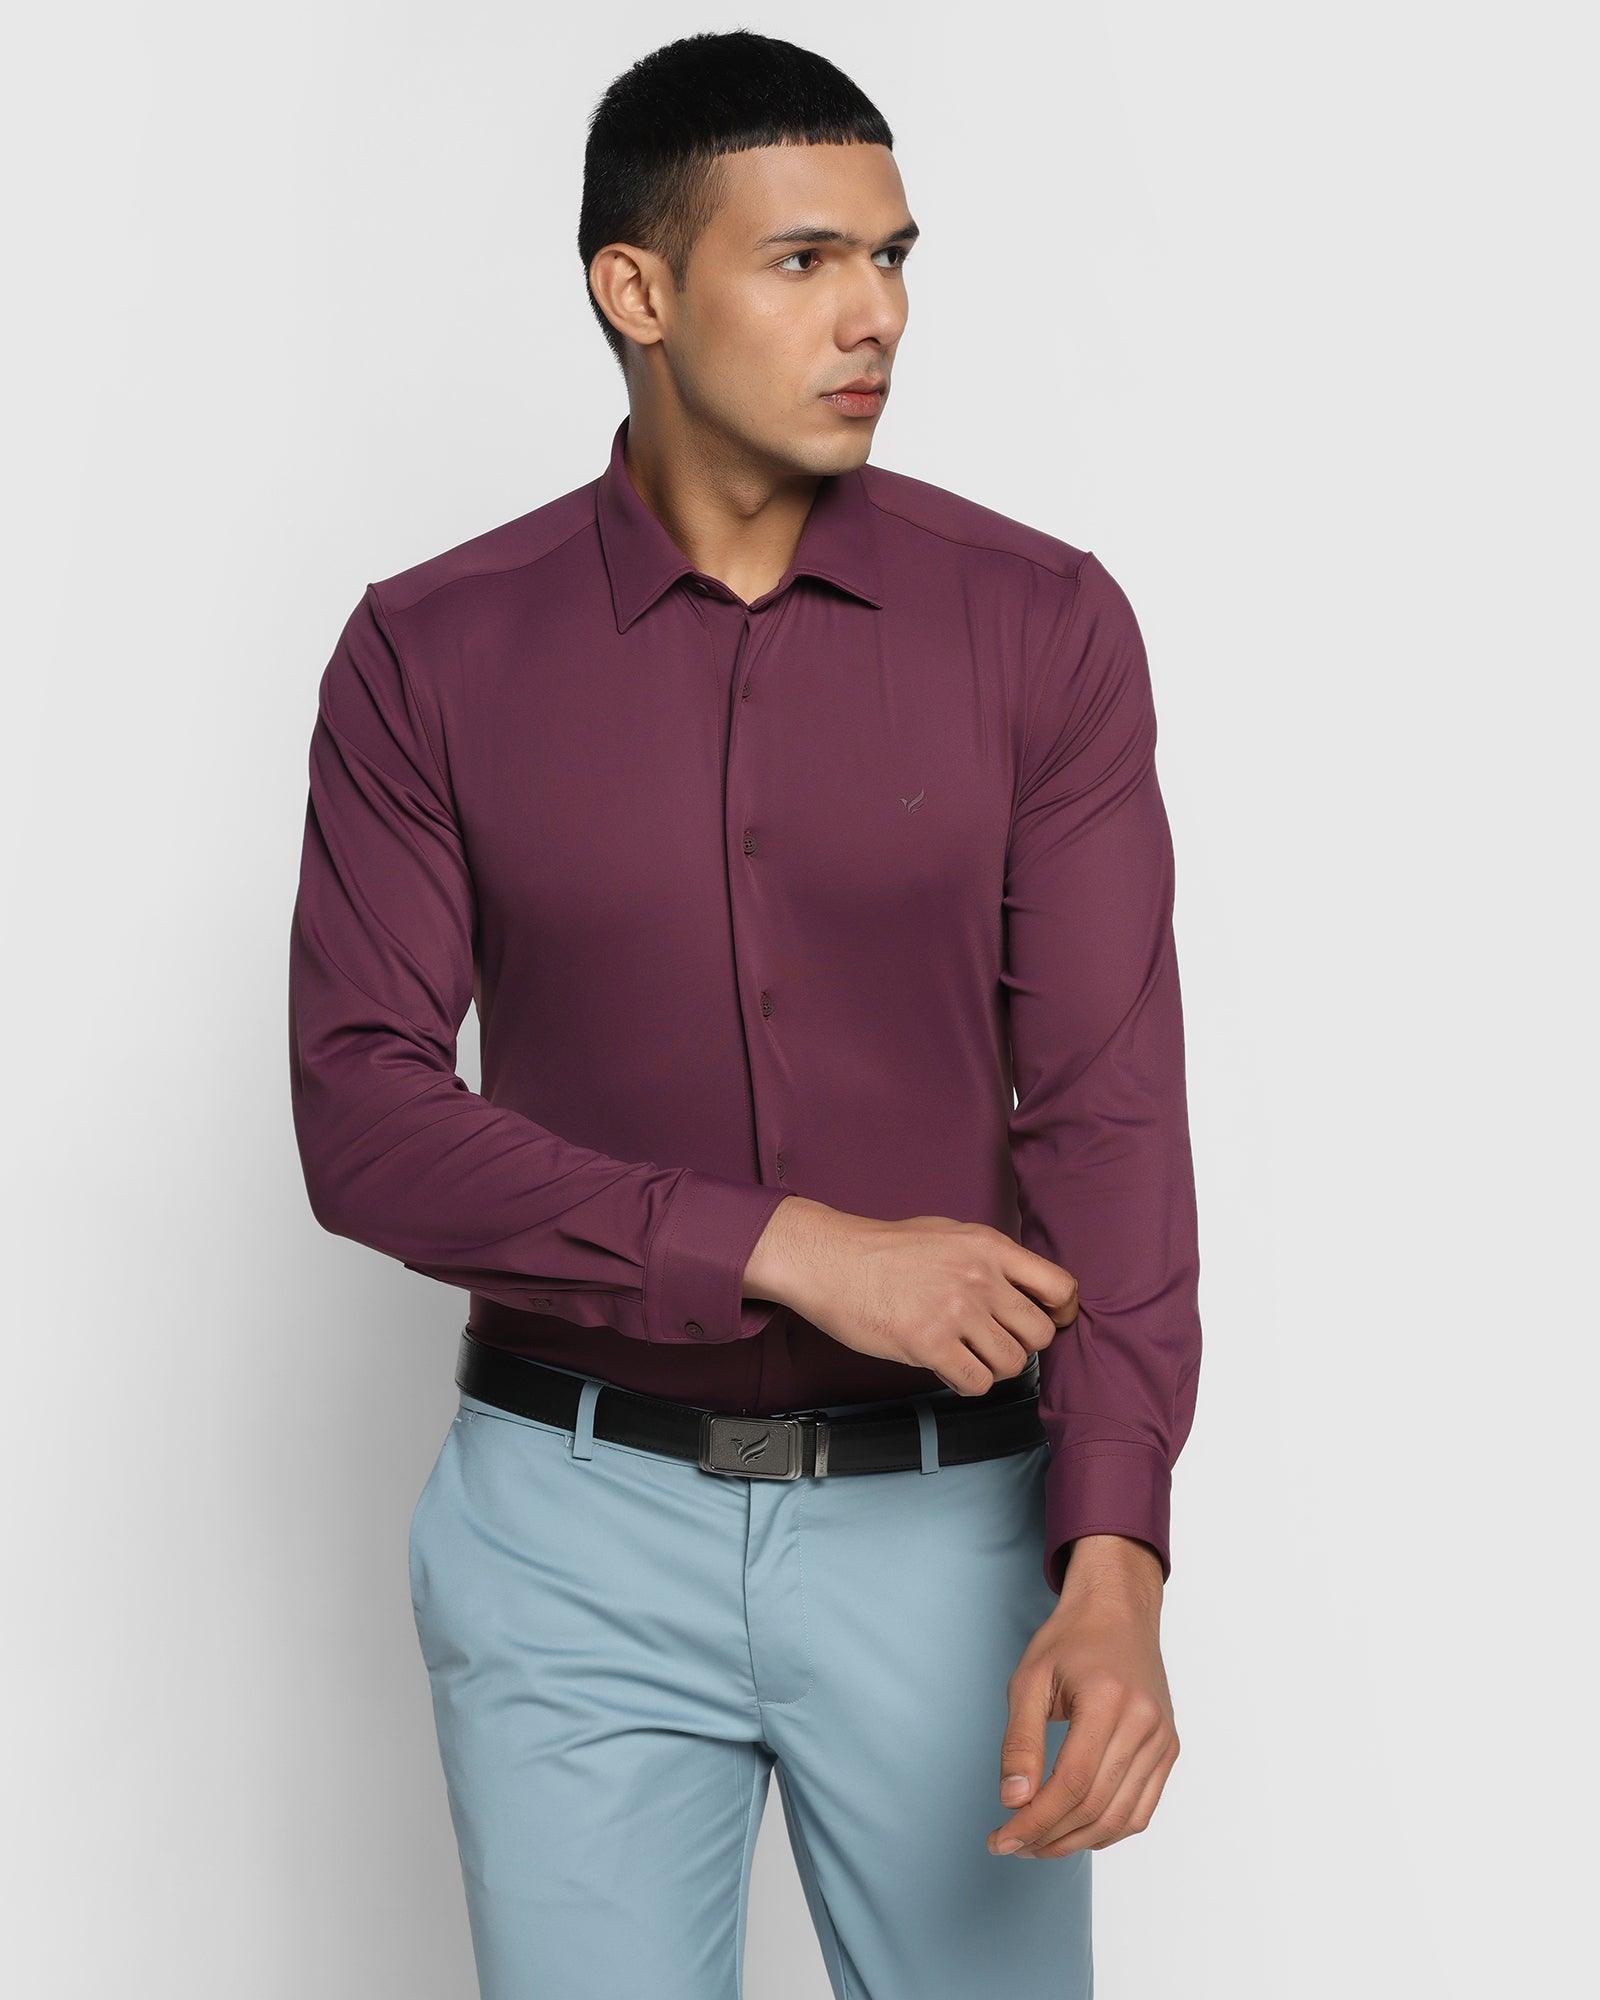 techpro formal shirt in plum (admin)